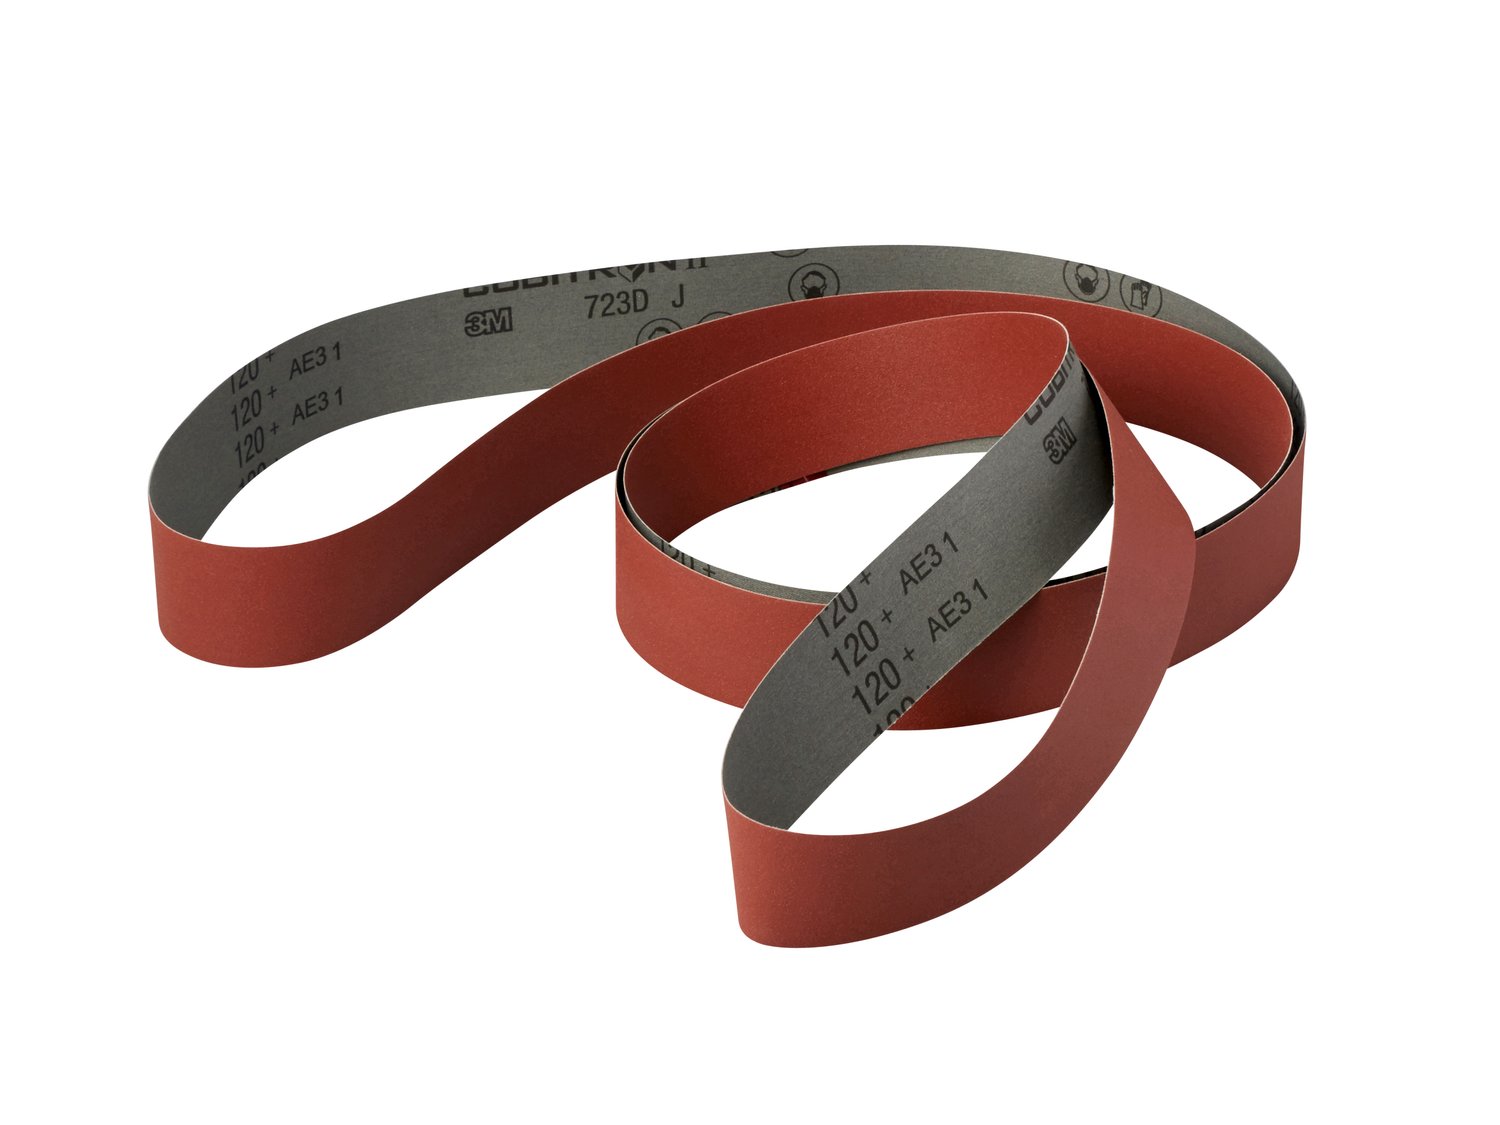 7010515051 - 3M Cubitron ll Cloth Belt 723D, 100+ J-weight, 3 in x 132 in,
Film-lok, Full-flex